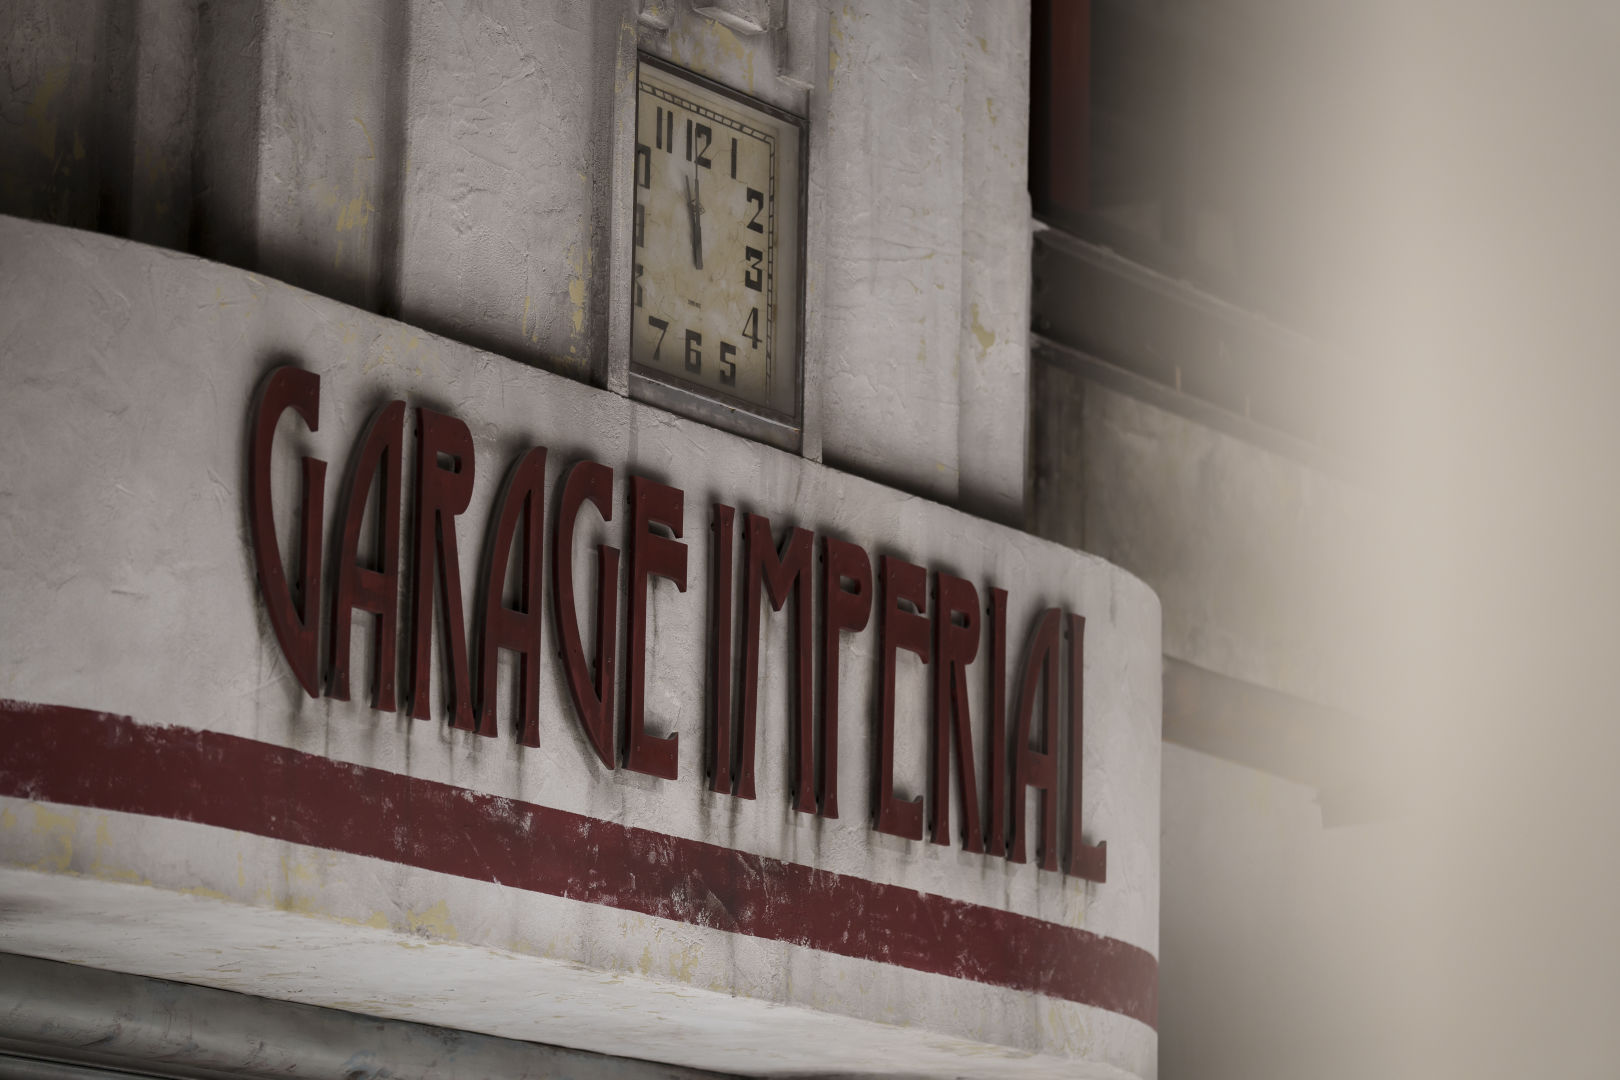 Garage Imperial (1)